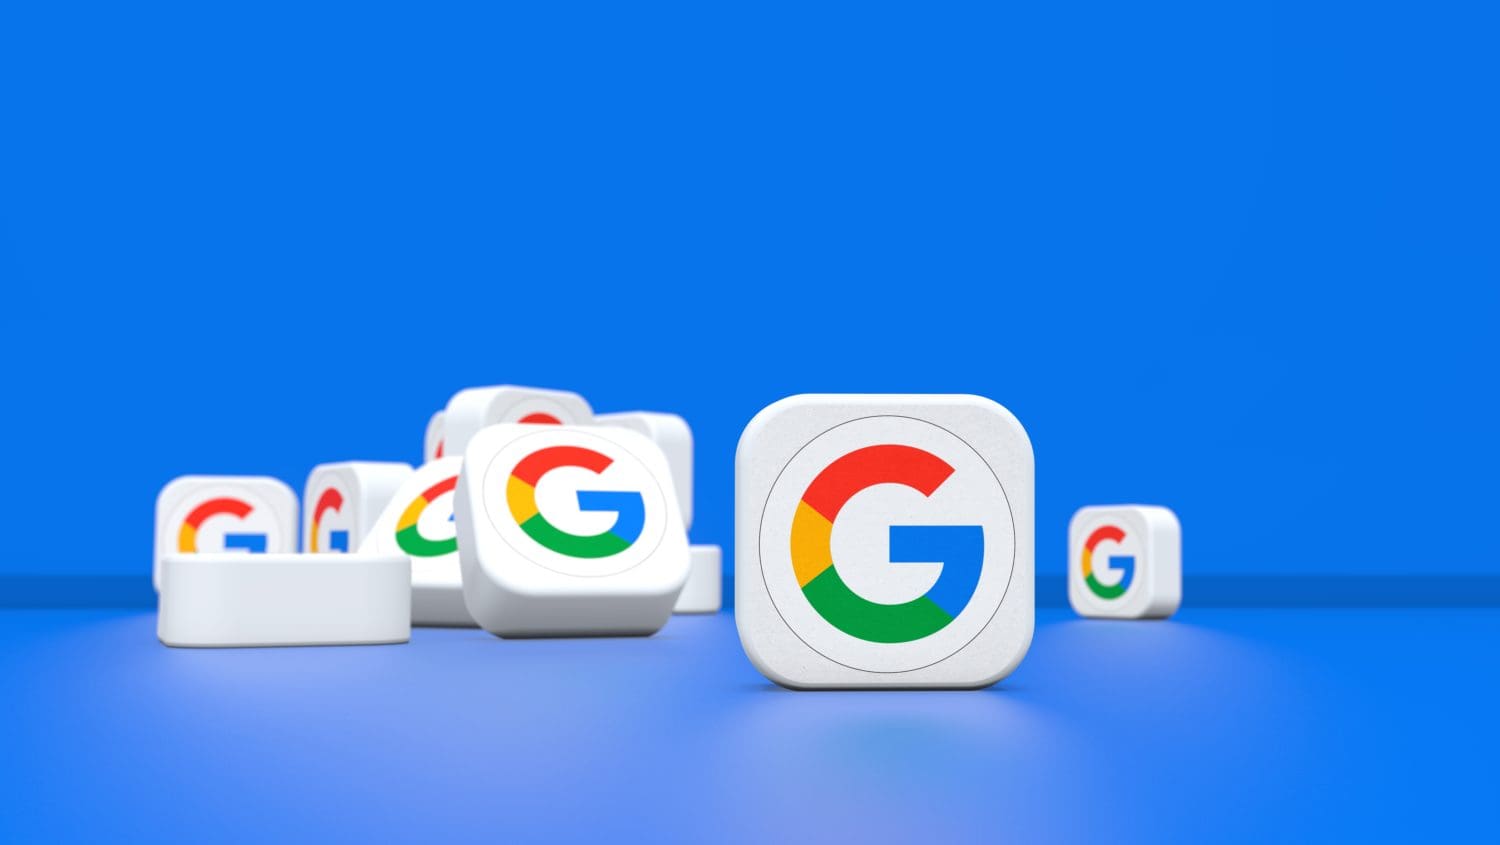 Google logos on a blue background.